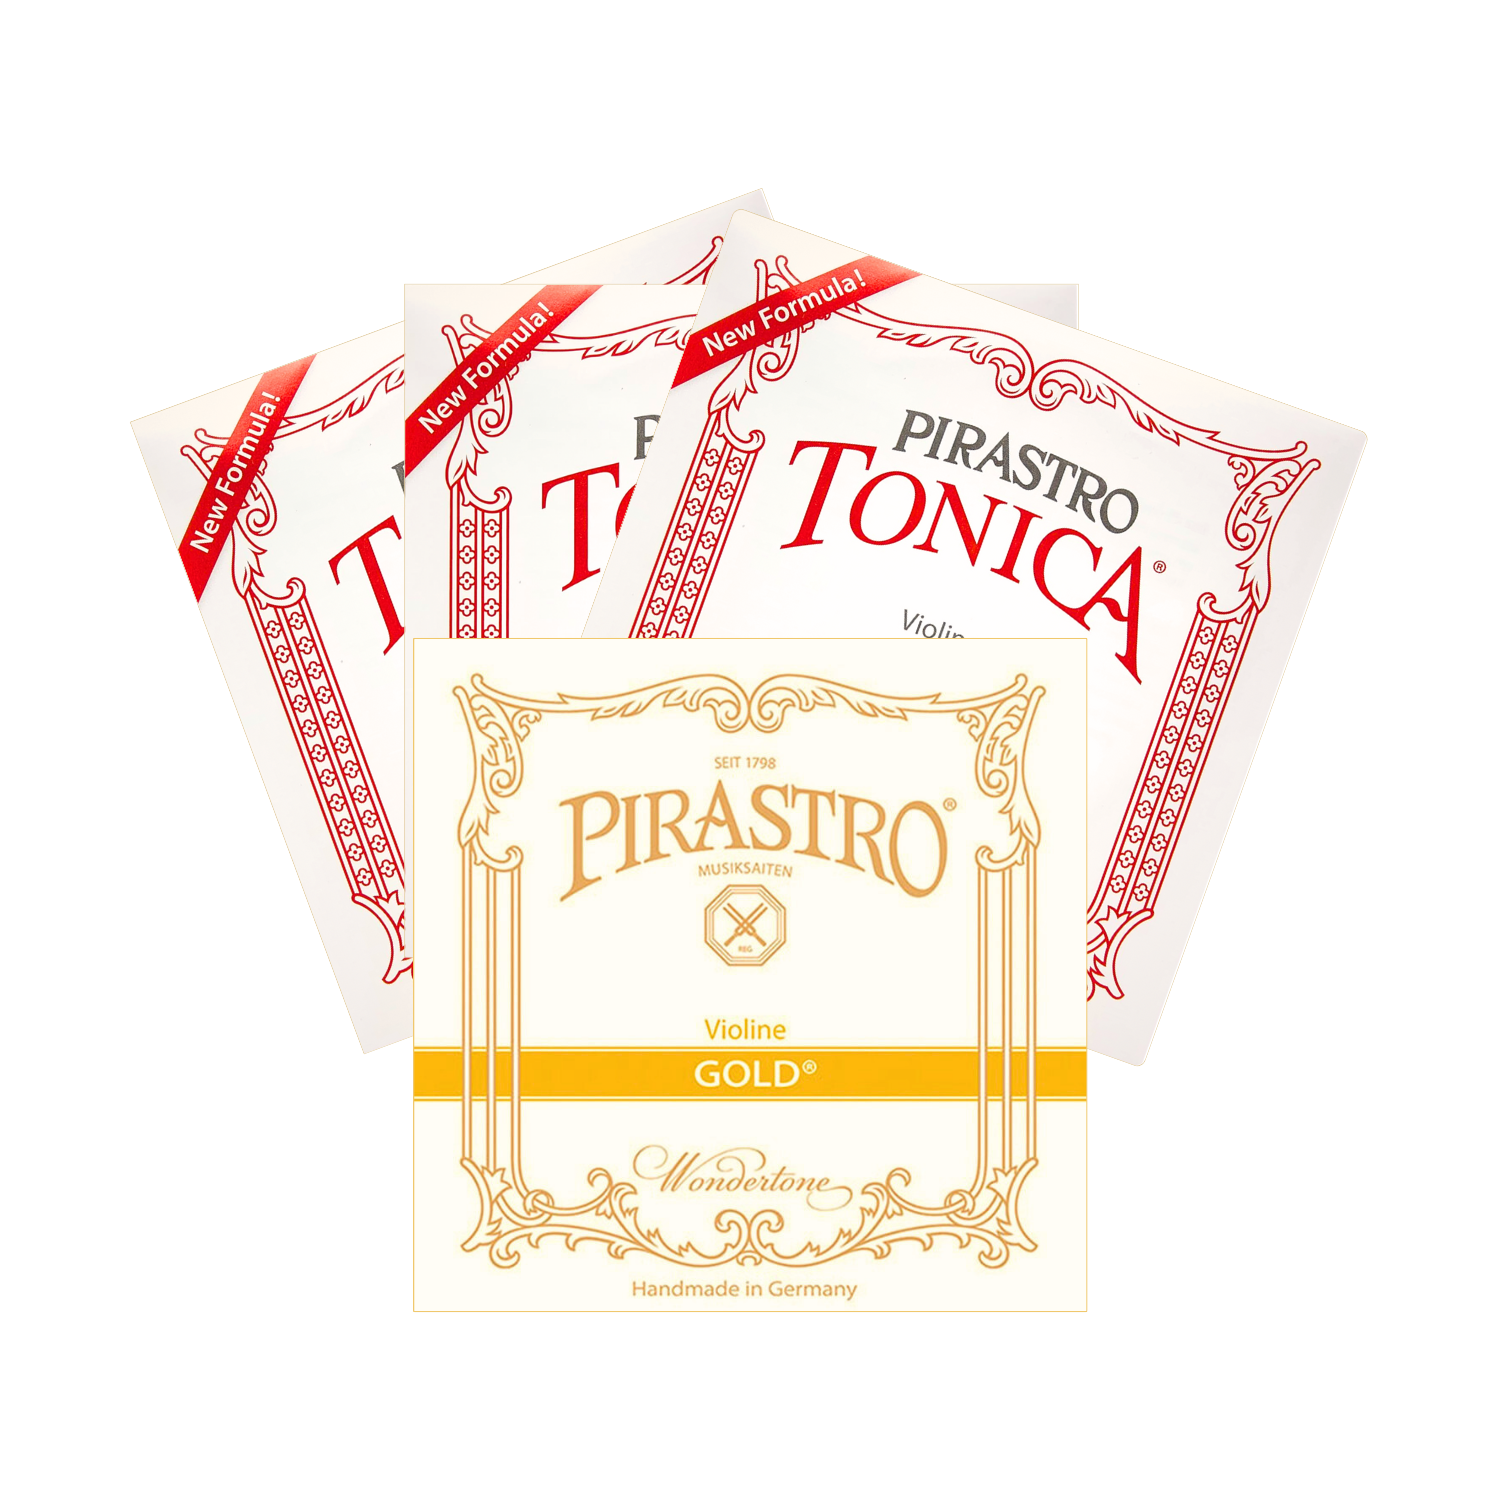 Pirastro Tonica Violin Strings Set with Gold Wondertone E